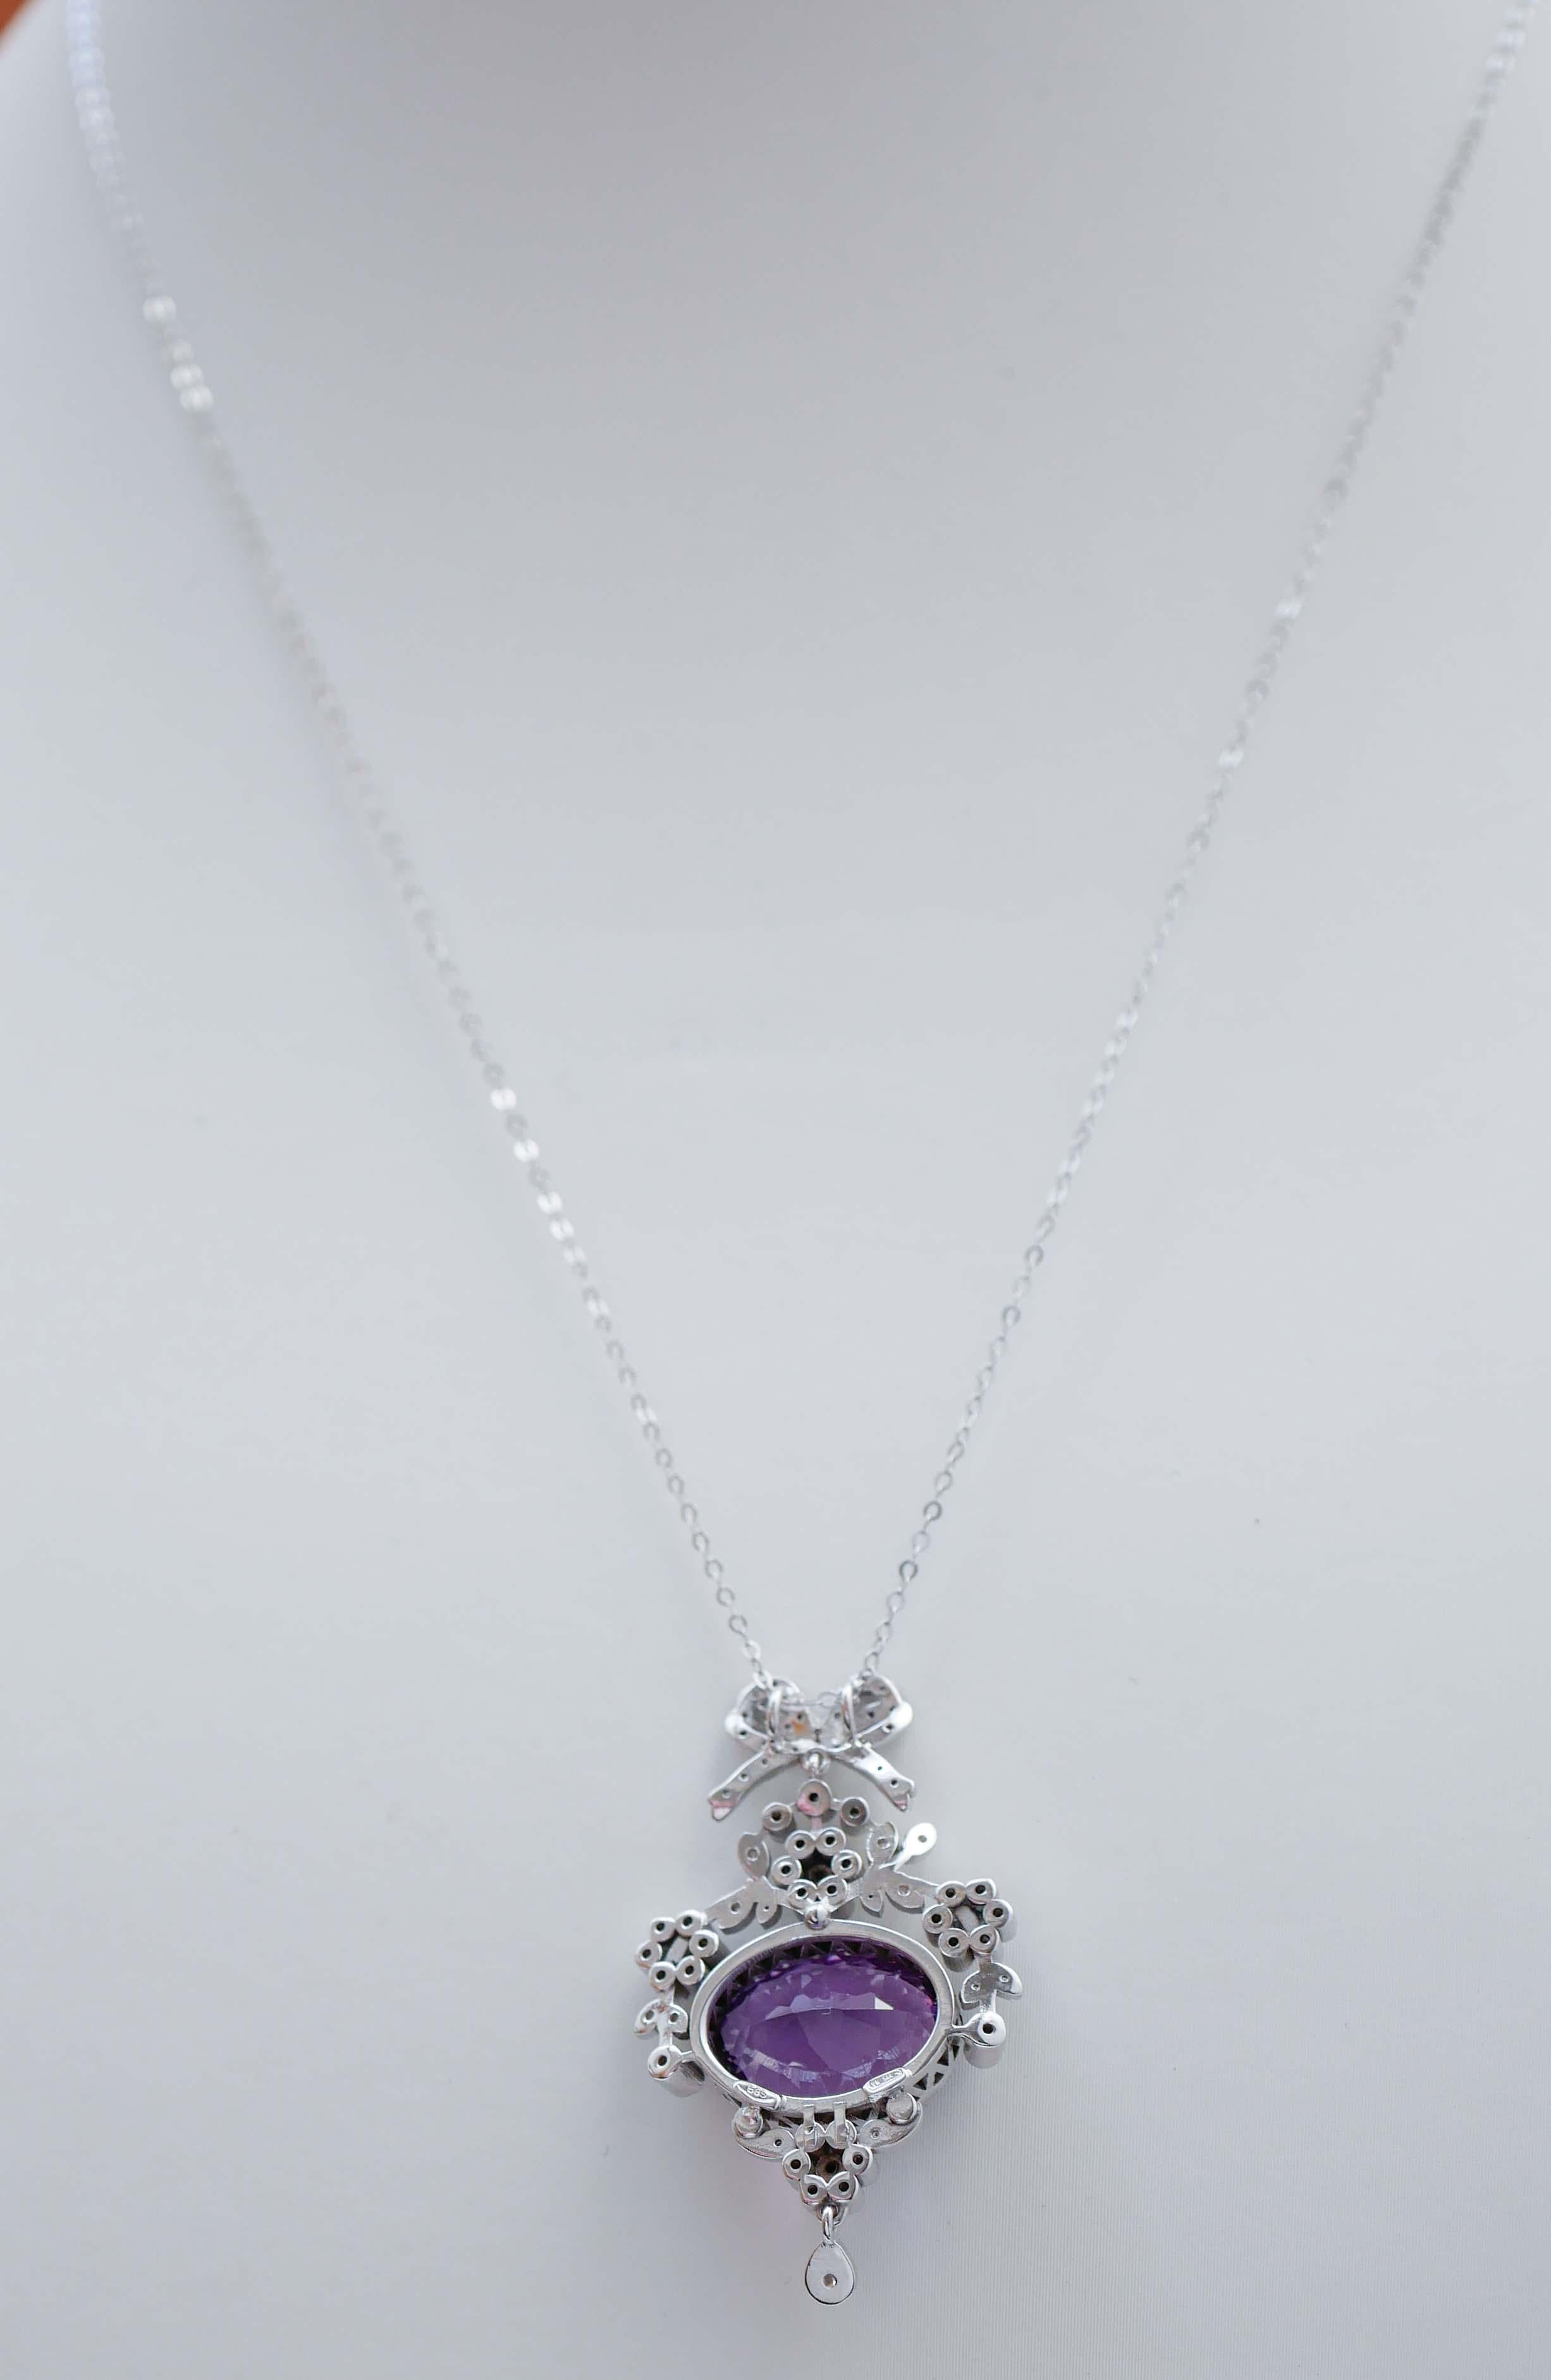 Mixed Cut Amethyst, Diamonds, 14 Karat White Gold Pendant Necklace. For Sale